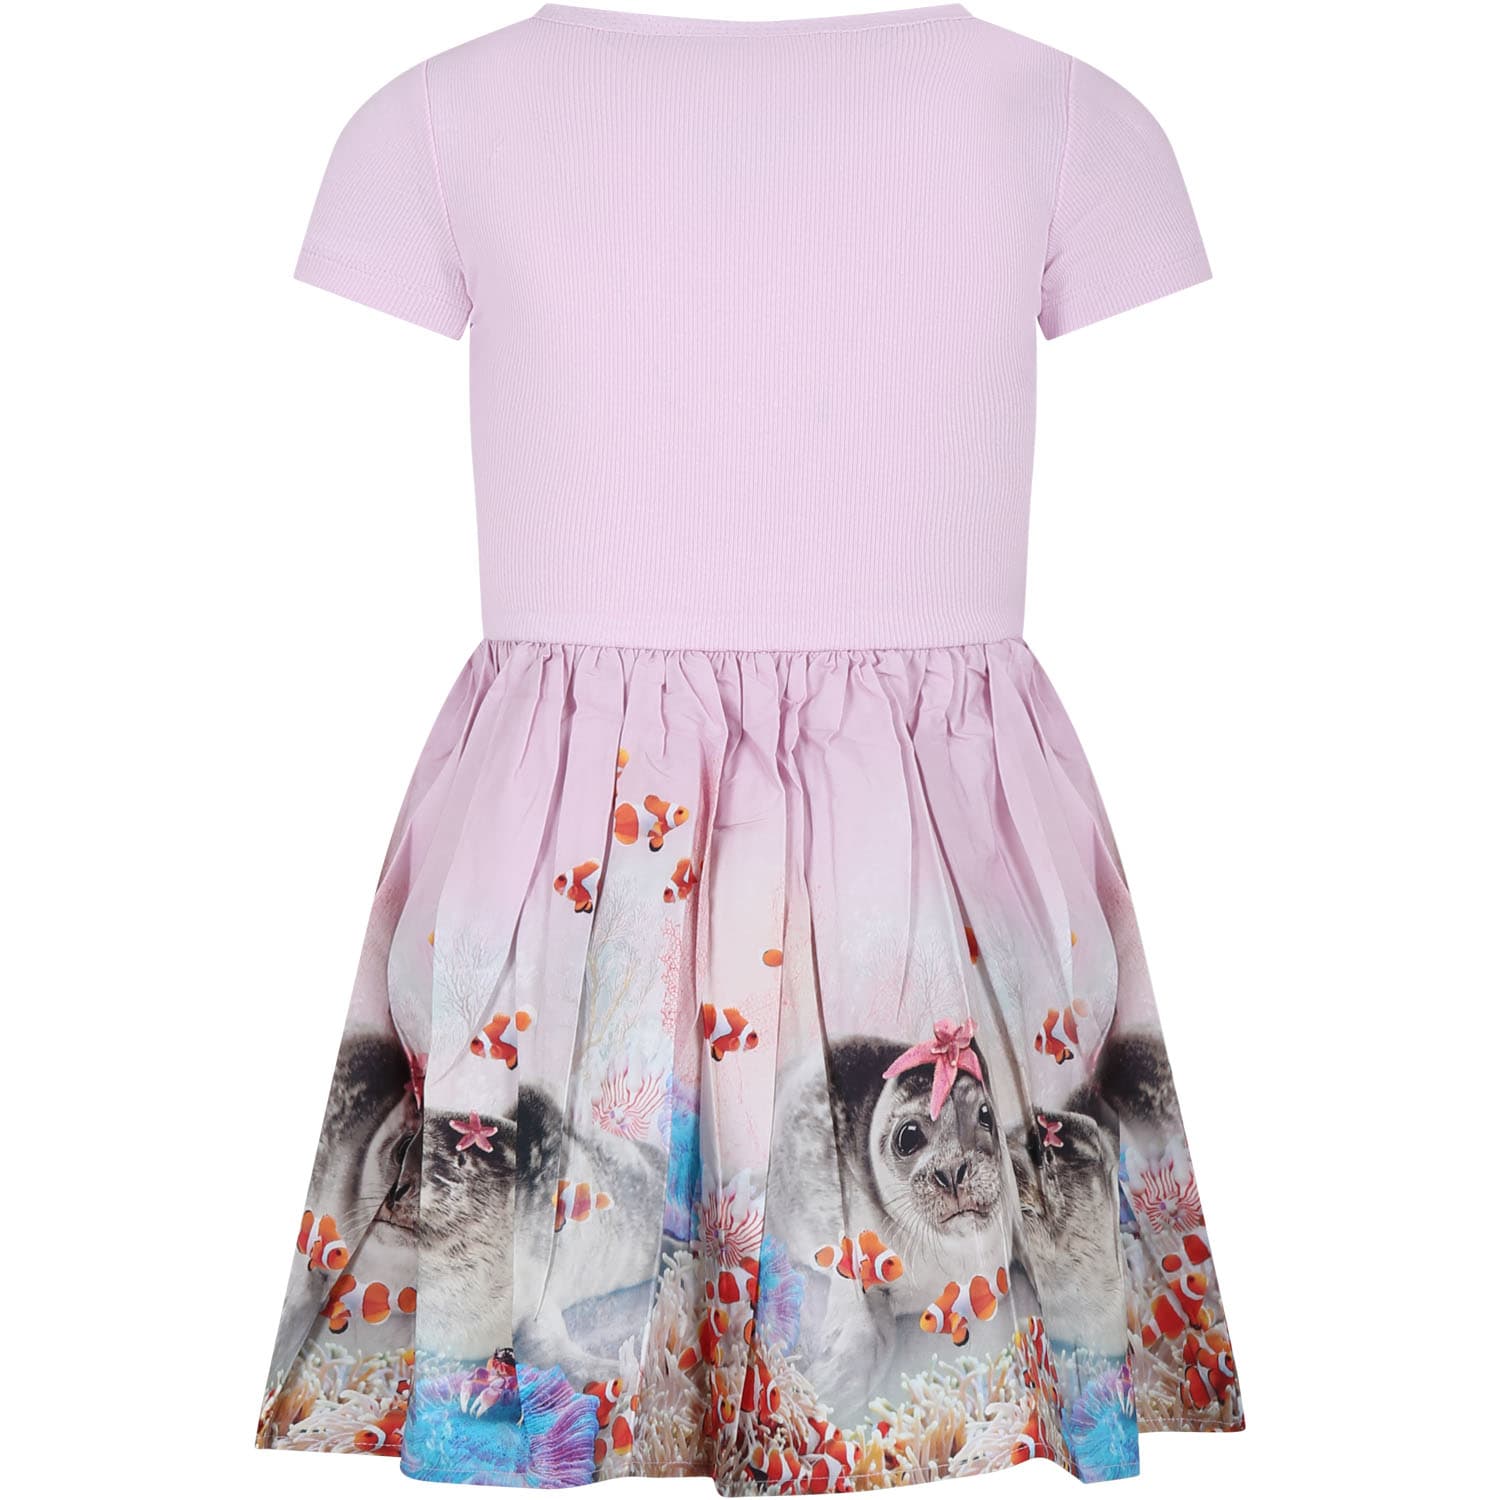 Shop Molo Pink Dress For Girl Seal Print